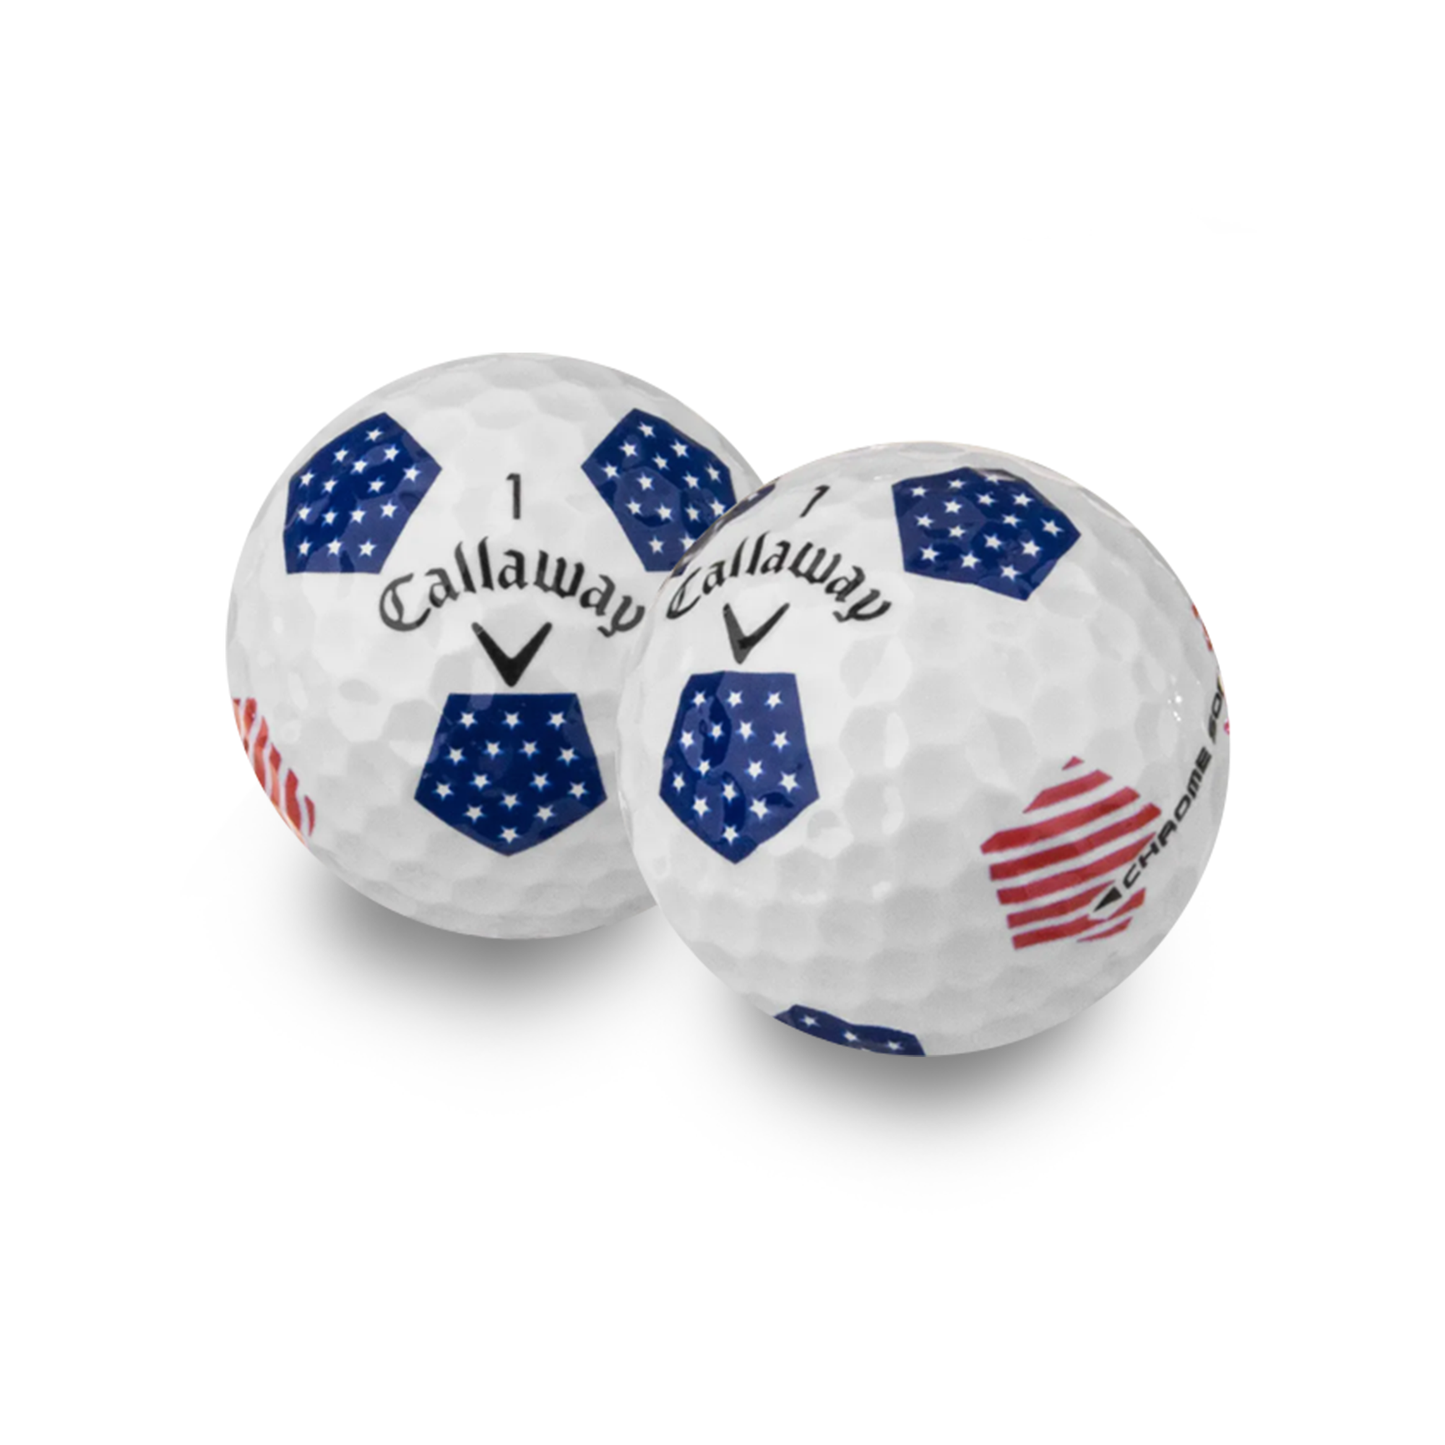 Used Callaway Chrome Soft Truvis Team USA Golf Balls - 1 Dozen